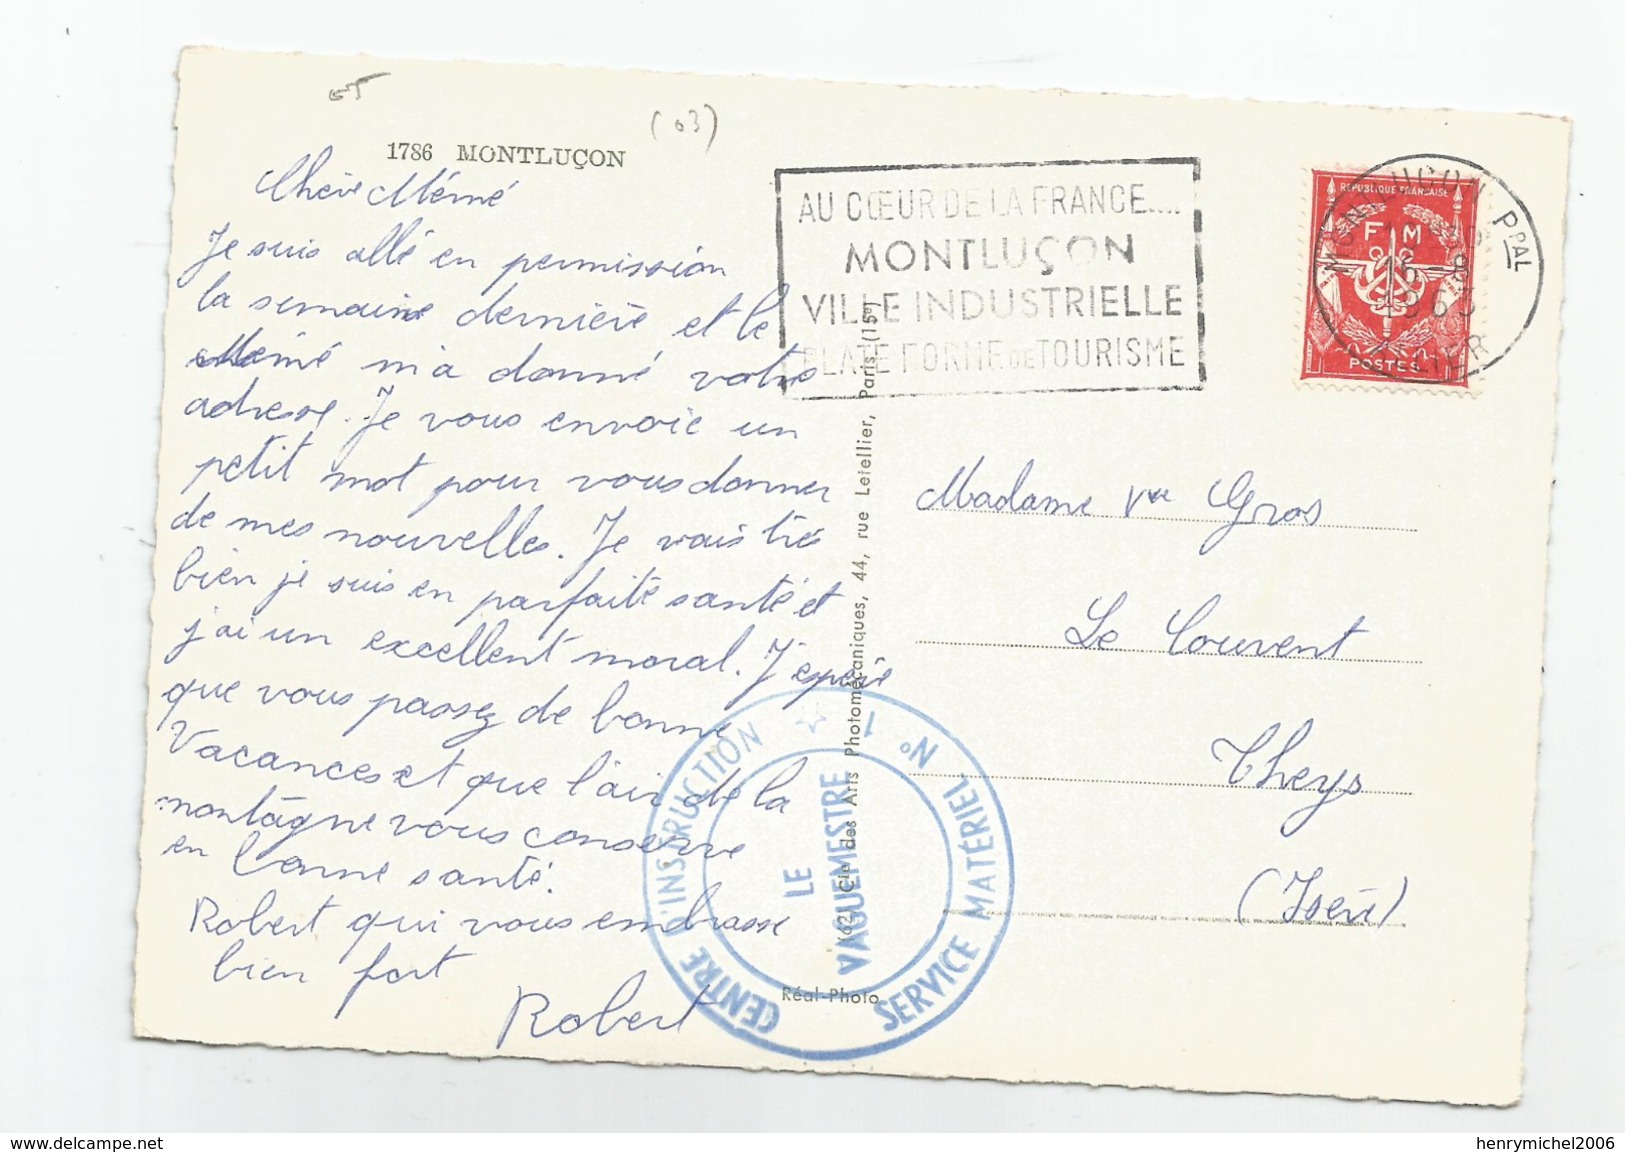 Marcophilie - Allier - 03 - Montluçon Cachet Militaire Centre D'instruction N1 Service Matériel N1 Timbre Fm 1963 - Military Postmarks From 1900 (out Of Wars Periods)